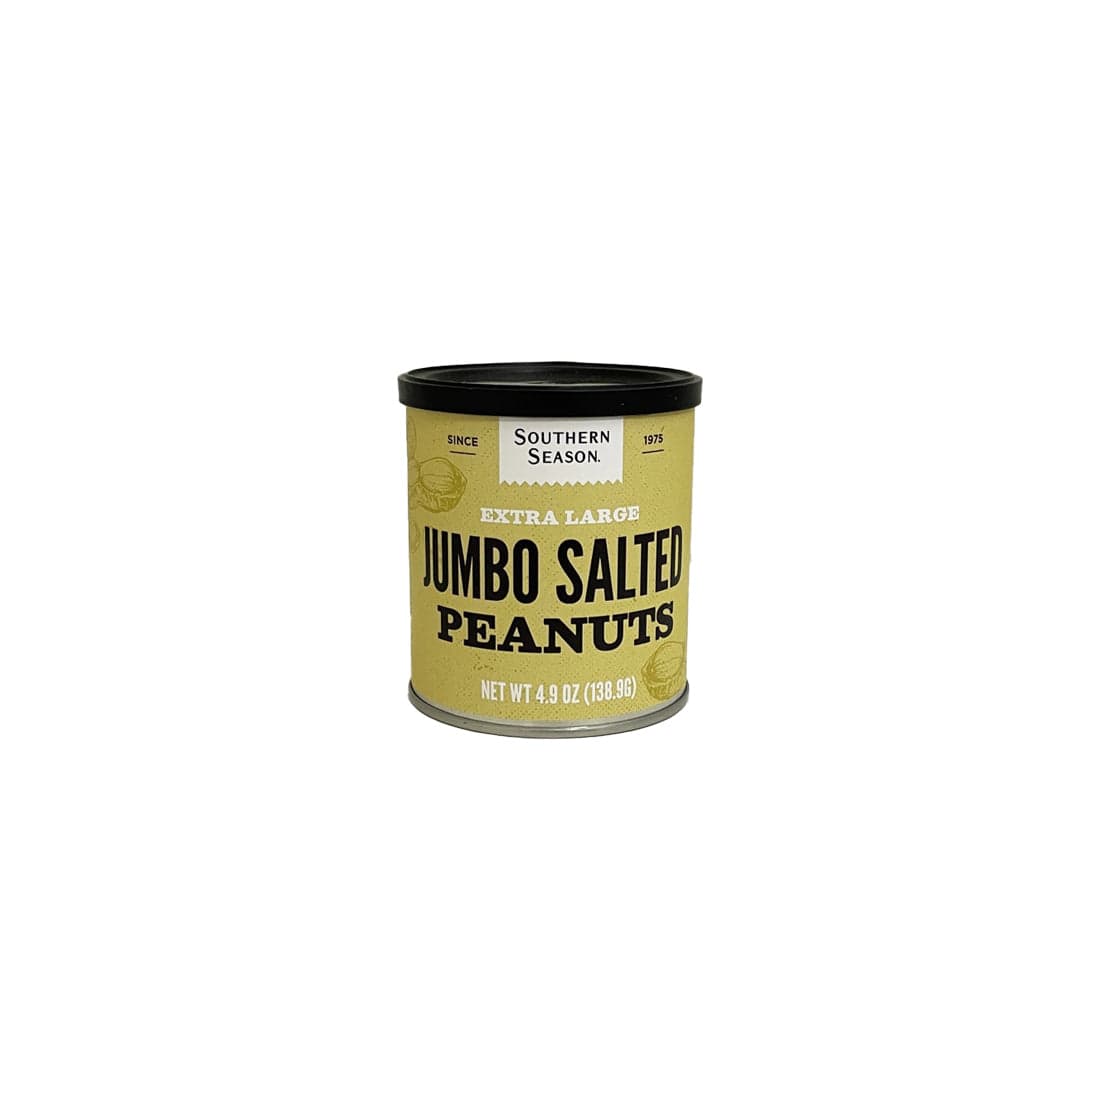 Southern Season Southern Season Jumbo Salted Peanuts 4.9 oz